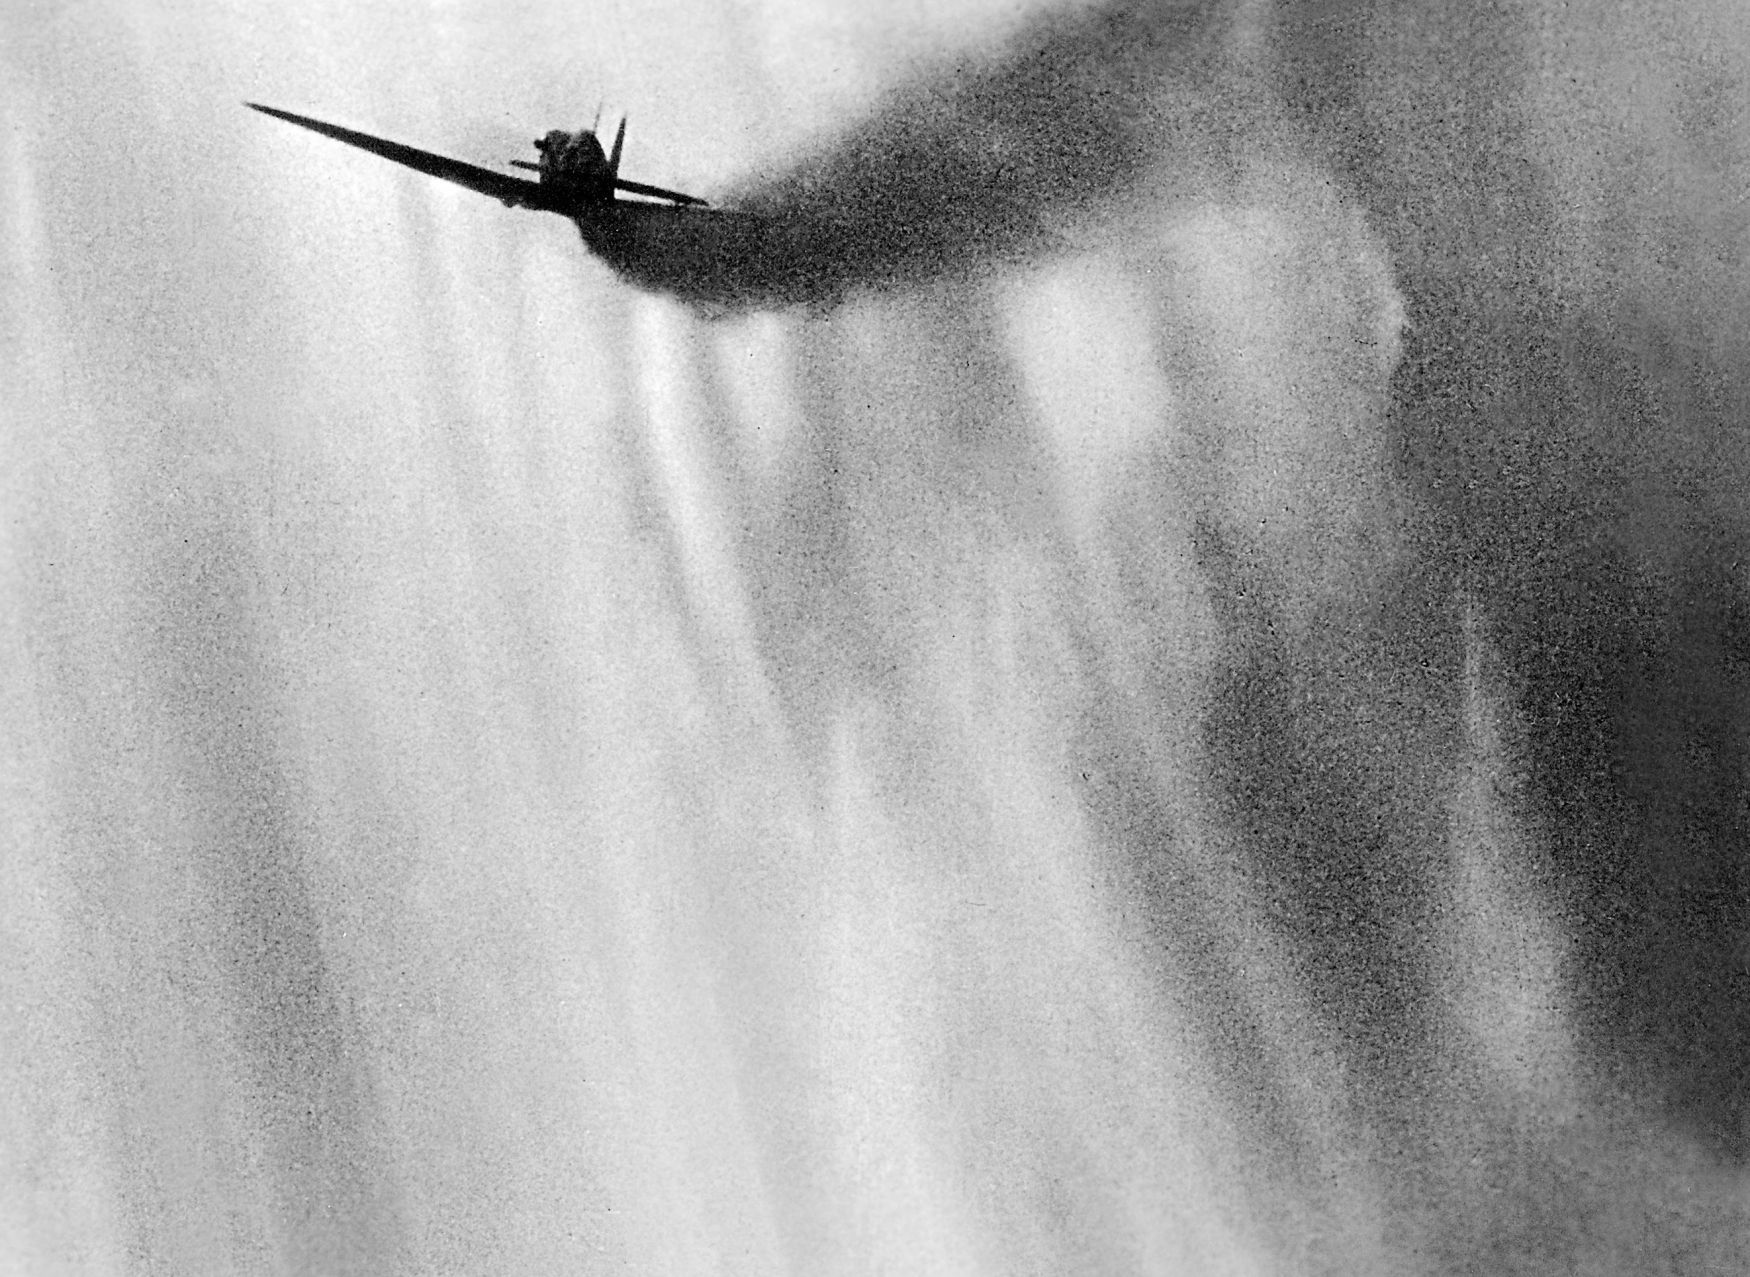 Fotogalerie / Spitfire / 80. let výročí / RAF / ČTK / 17